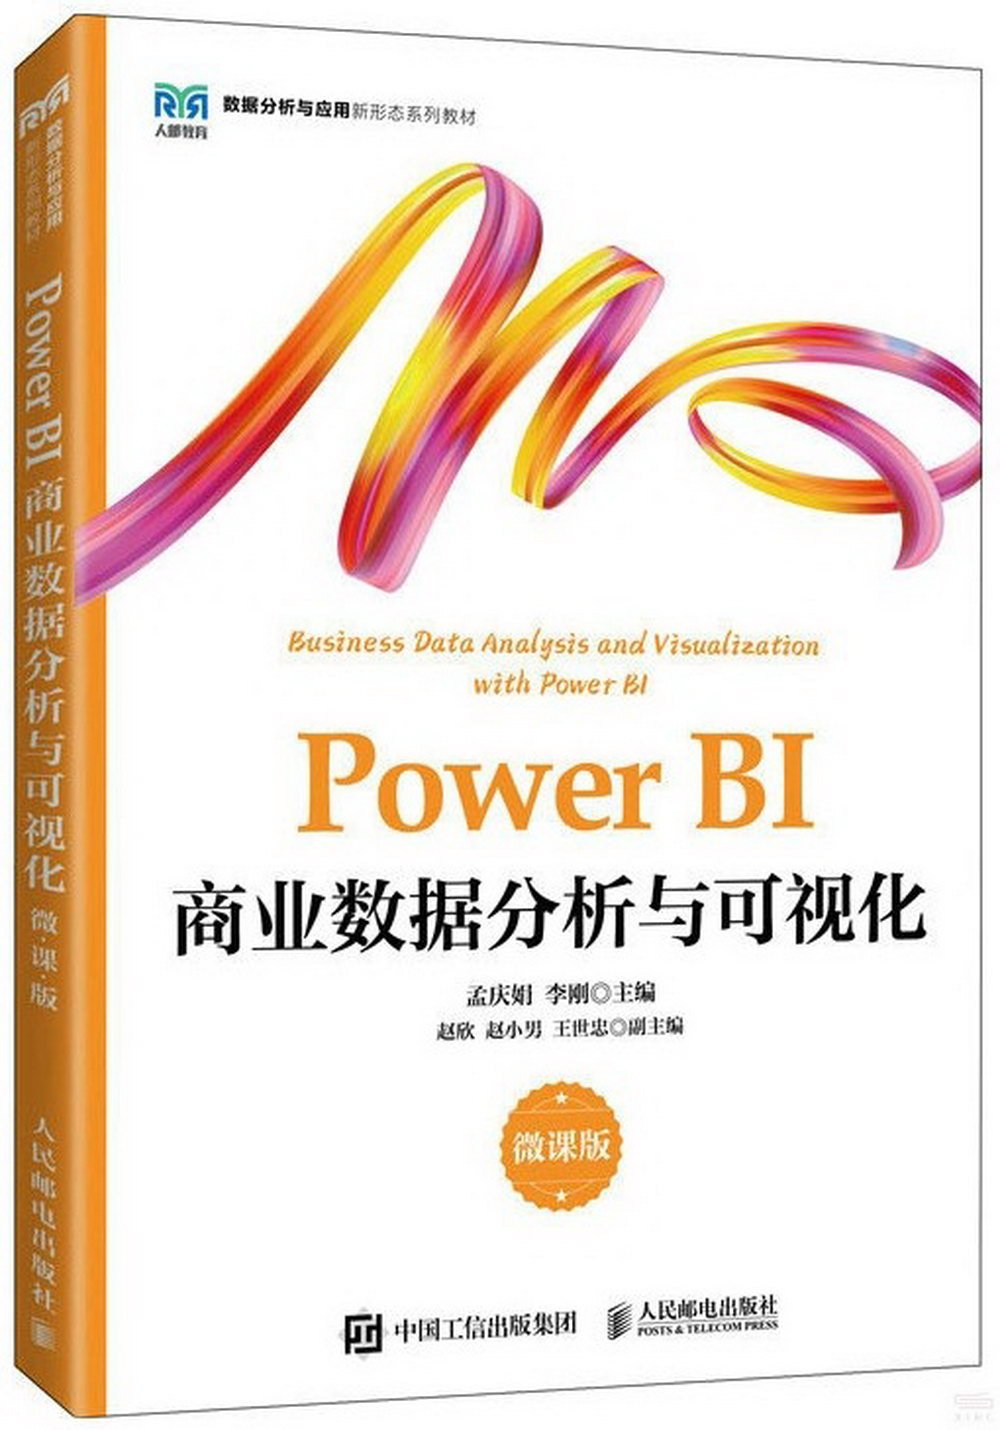 Power BI商業數據分析與可視化